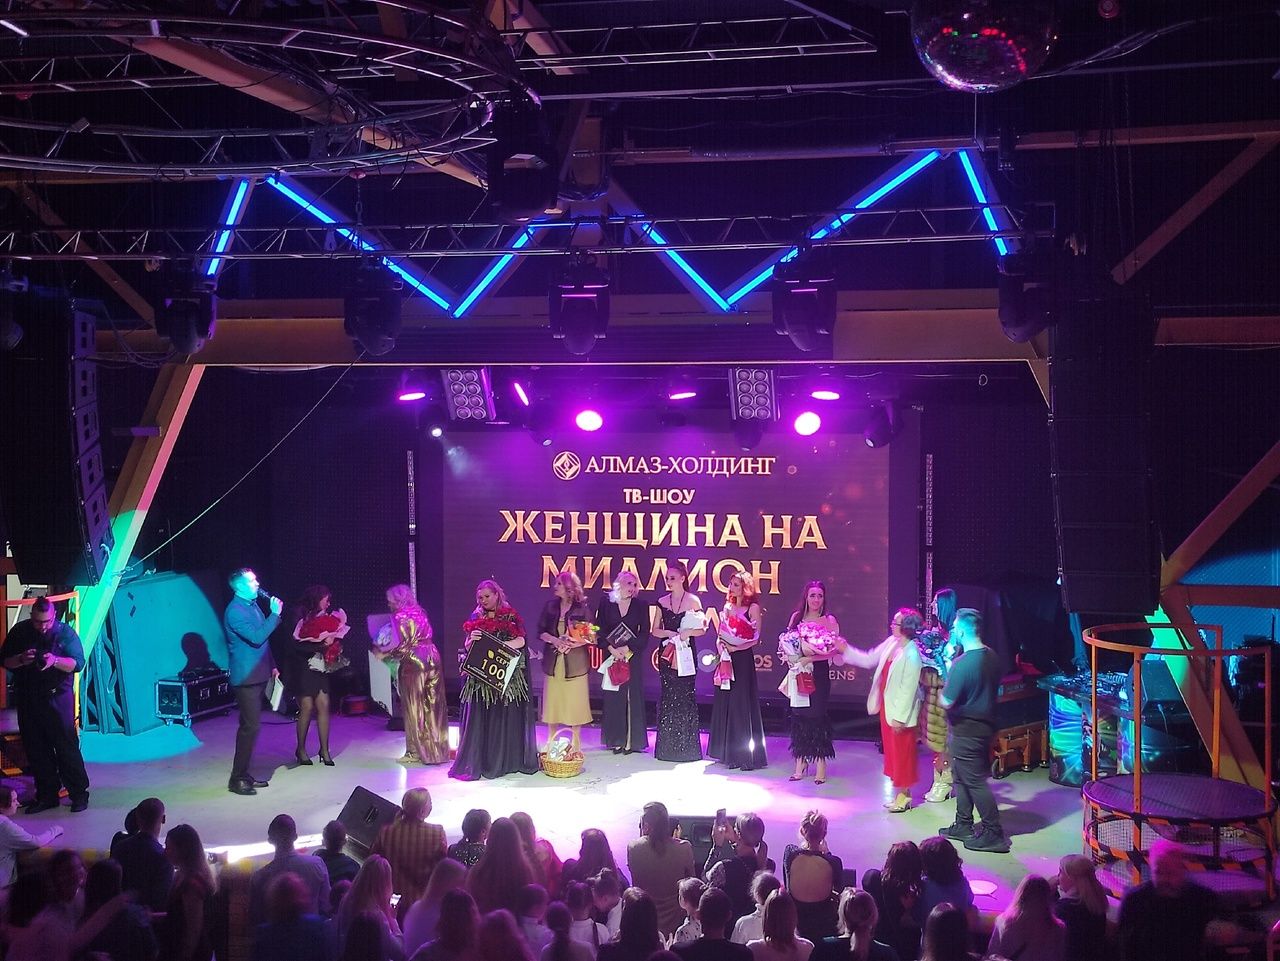 Миллион рублей в финале шоу «Женщина на миллион» порвали на две части